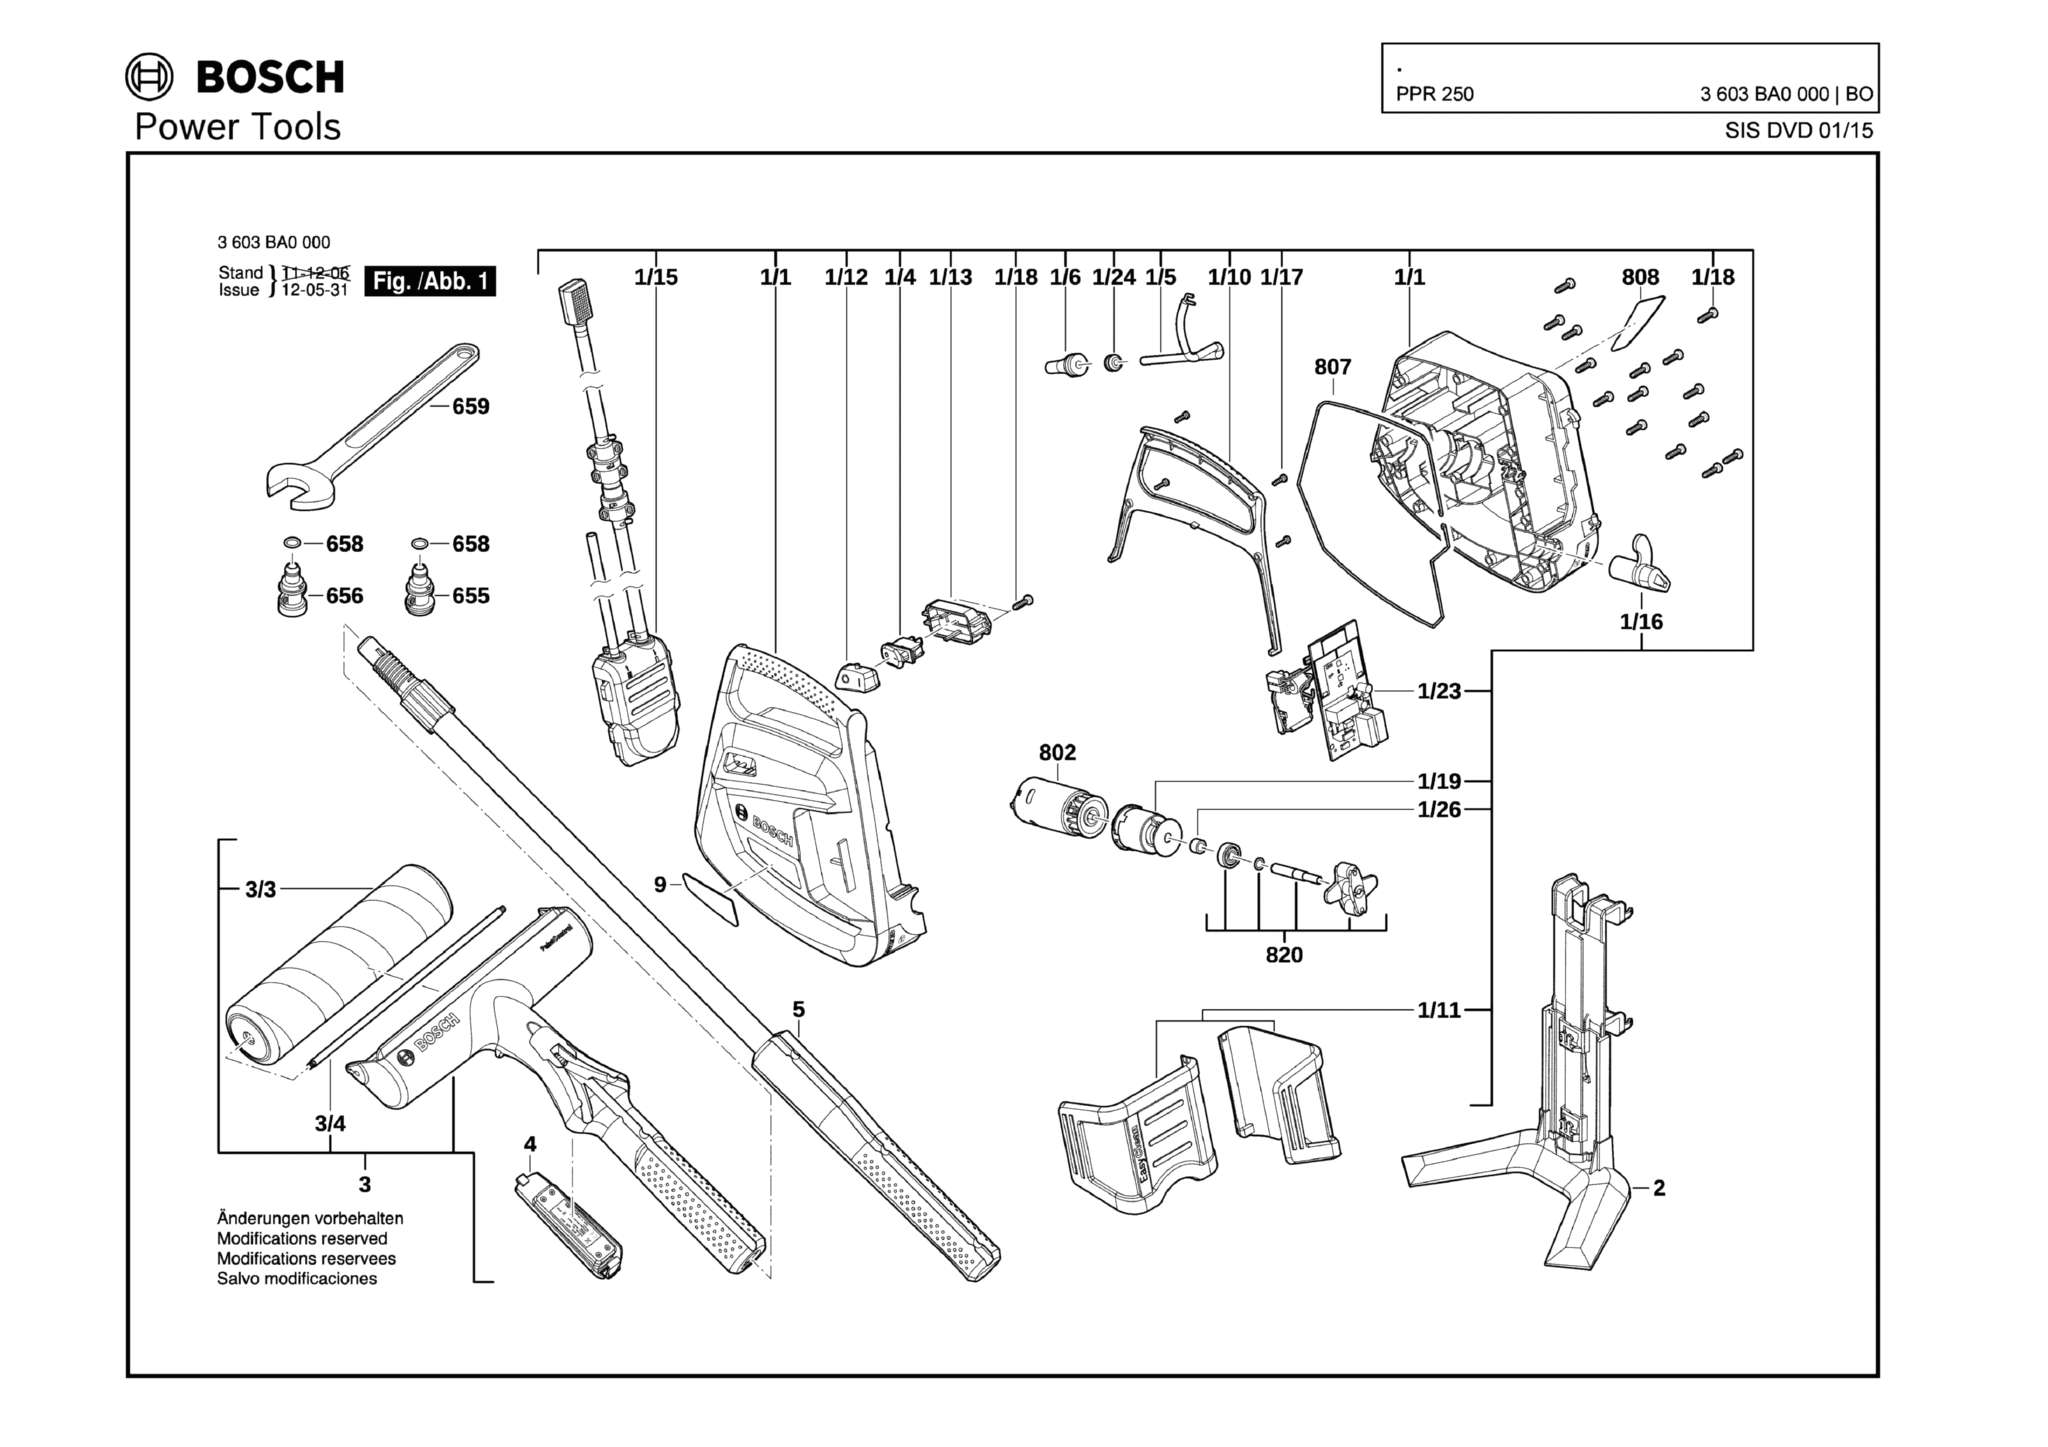 Запчасти, схема и деталировка Bosch PPR 250 (ТИП 3603BA0000)